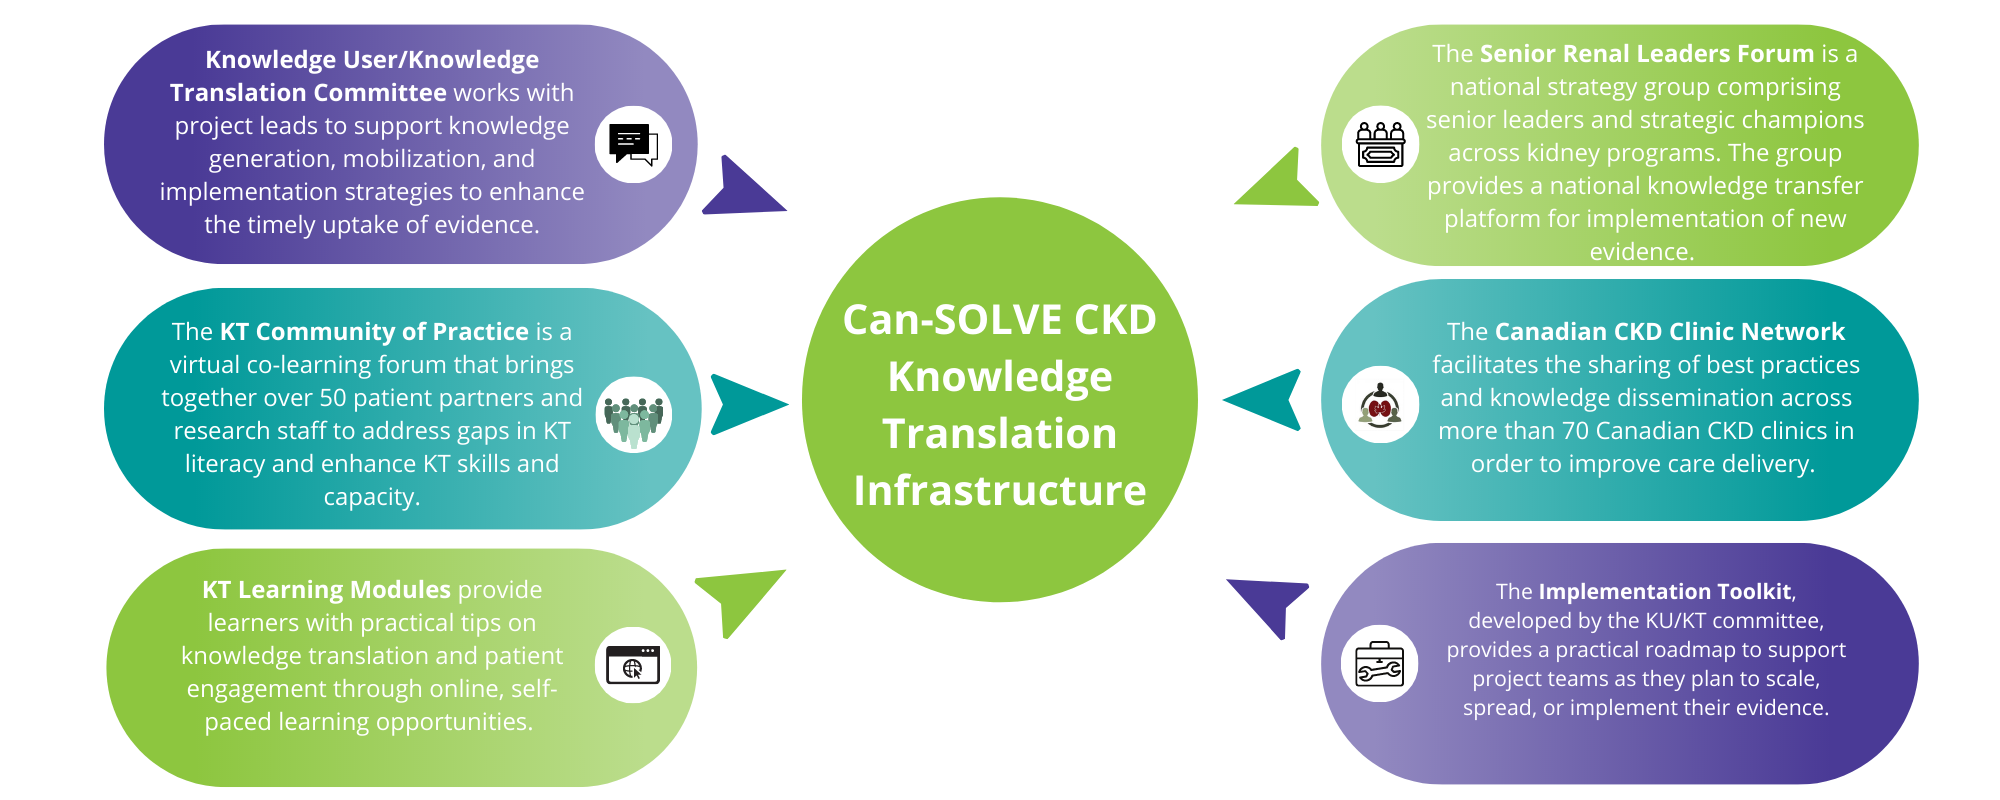 Can-SOLVE CKD Knowledge Translation Infrastructure